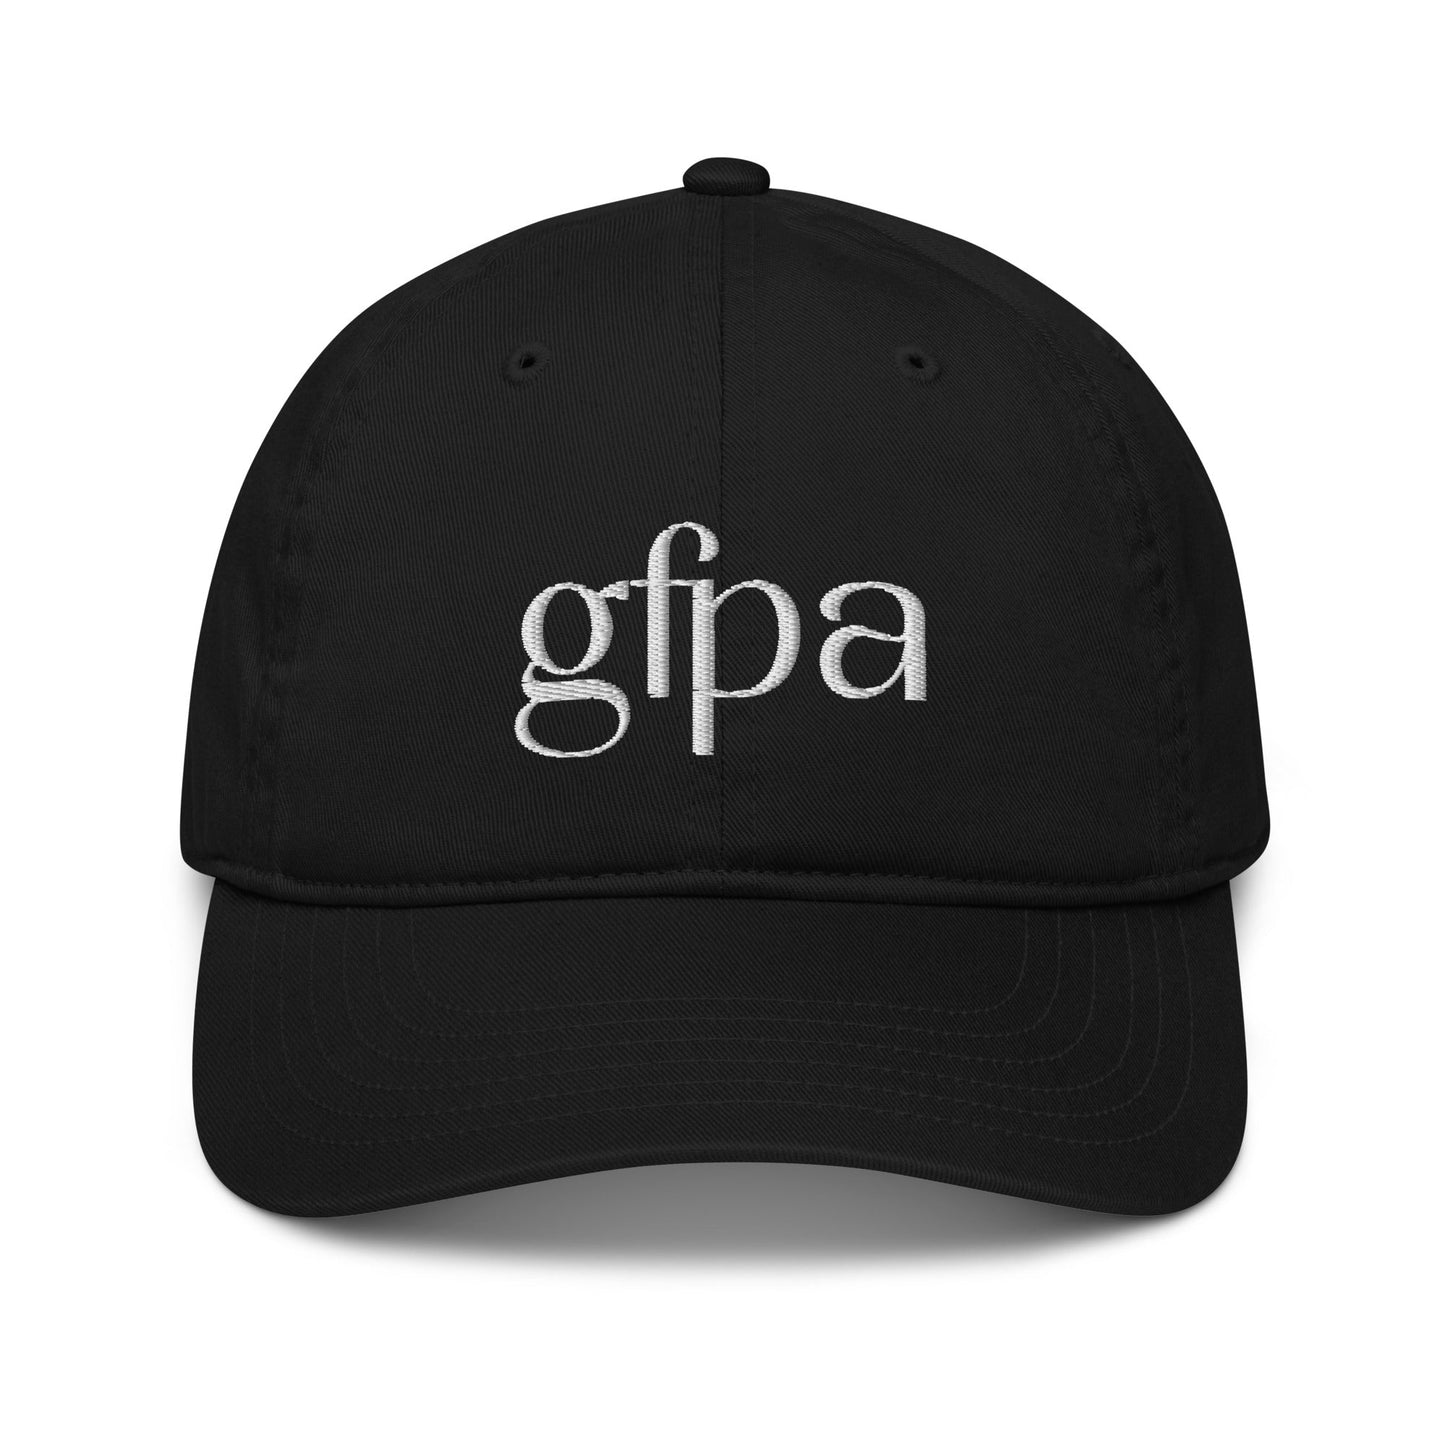 GFPA Organic Bundle - Girl From Peel Apparel - Bundle